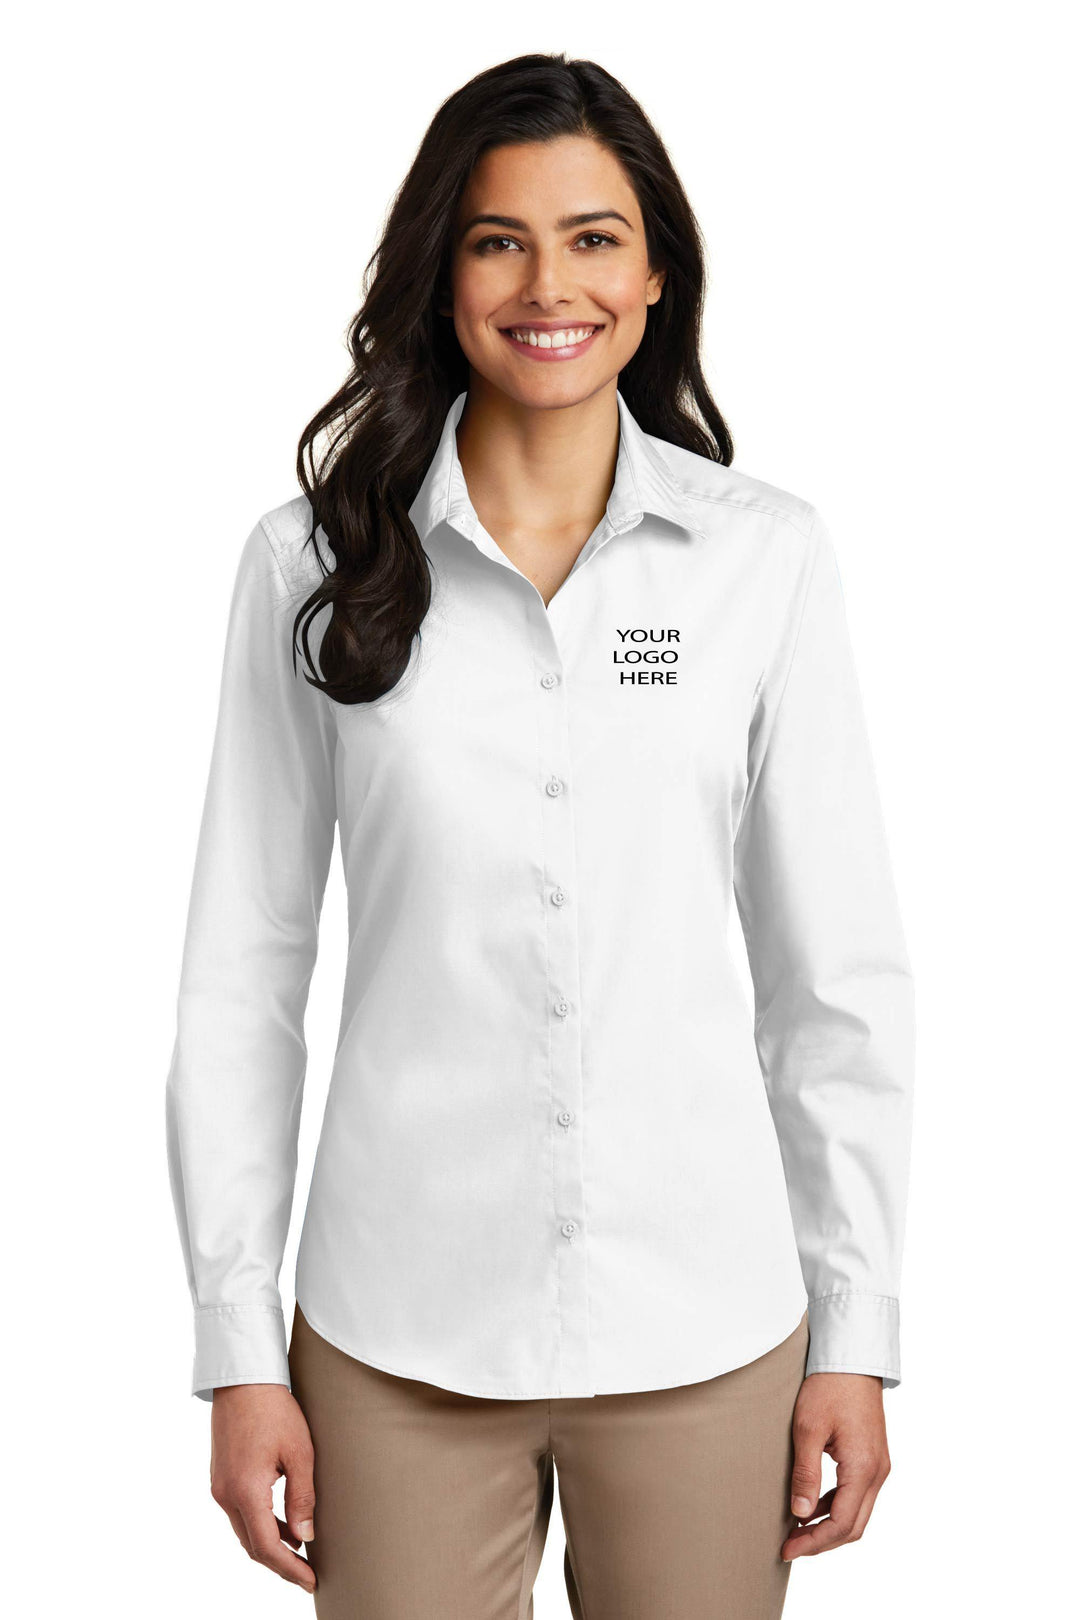 Keller Williams KW-SMLW100 Ladies PA Long Sleeve Carefree Polo Poplin Shirt 